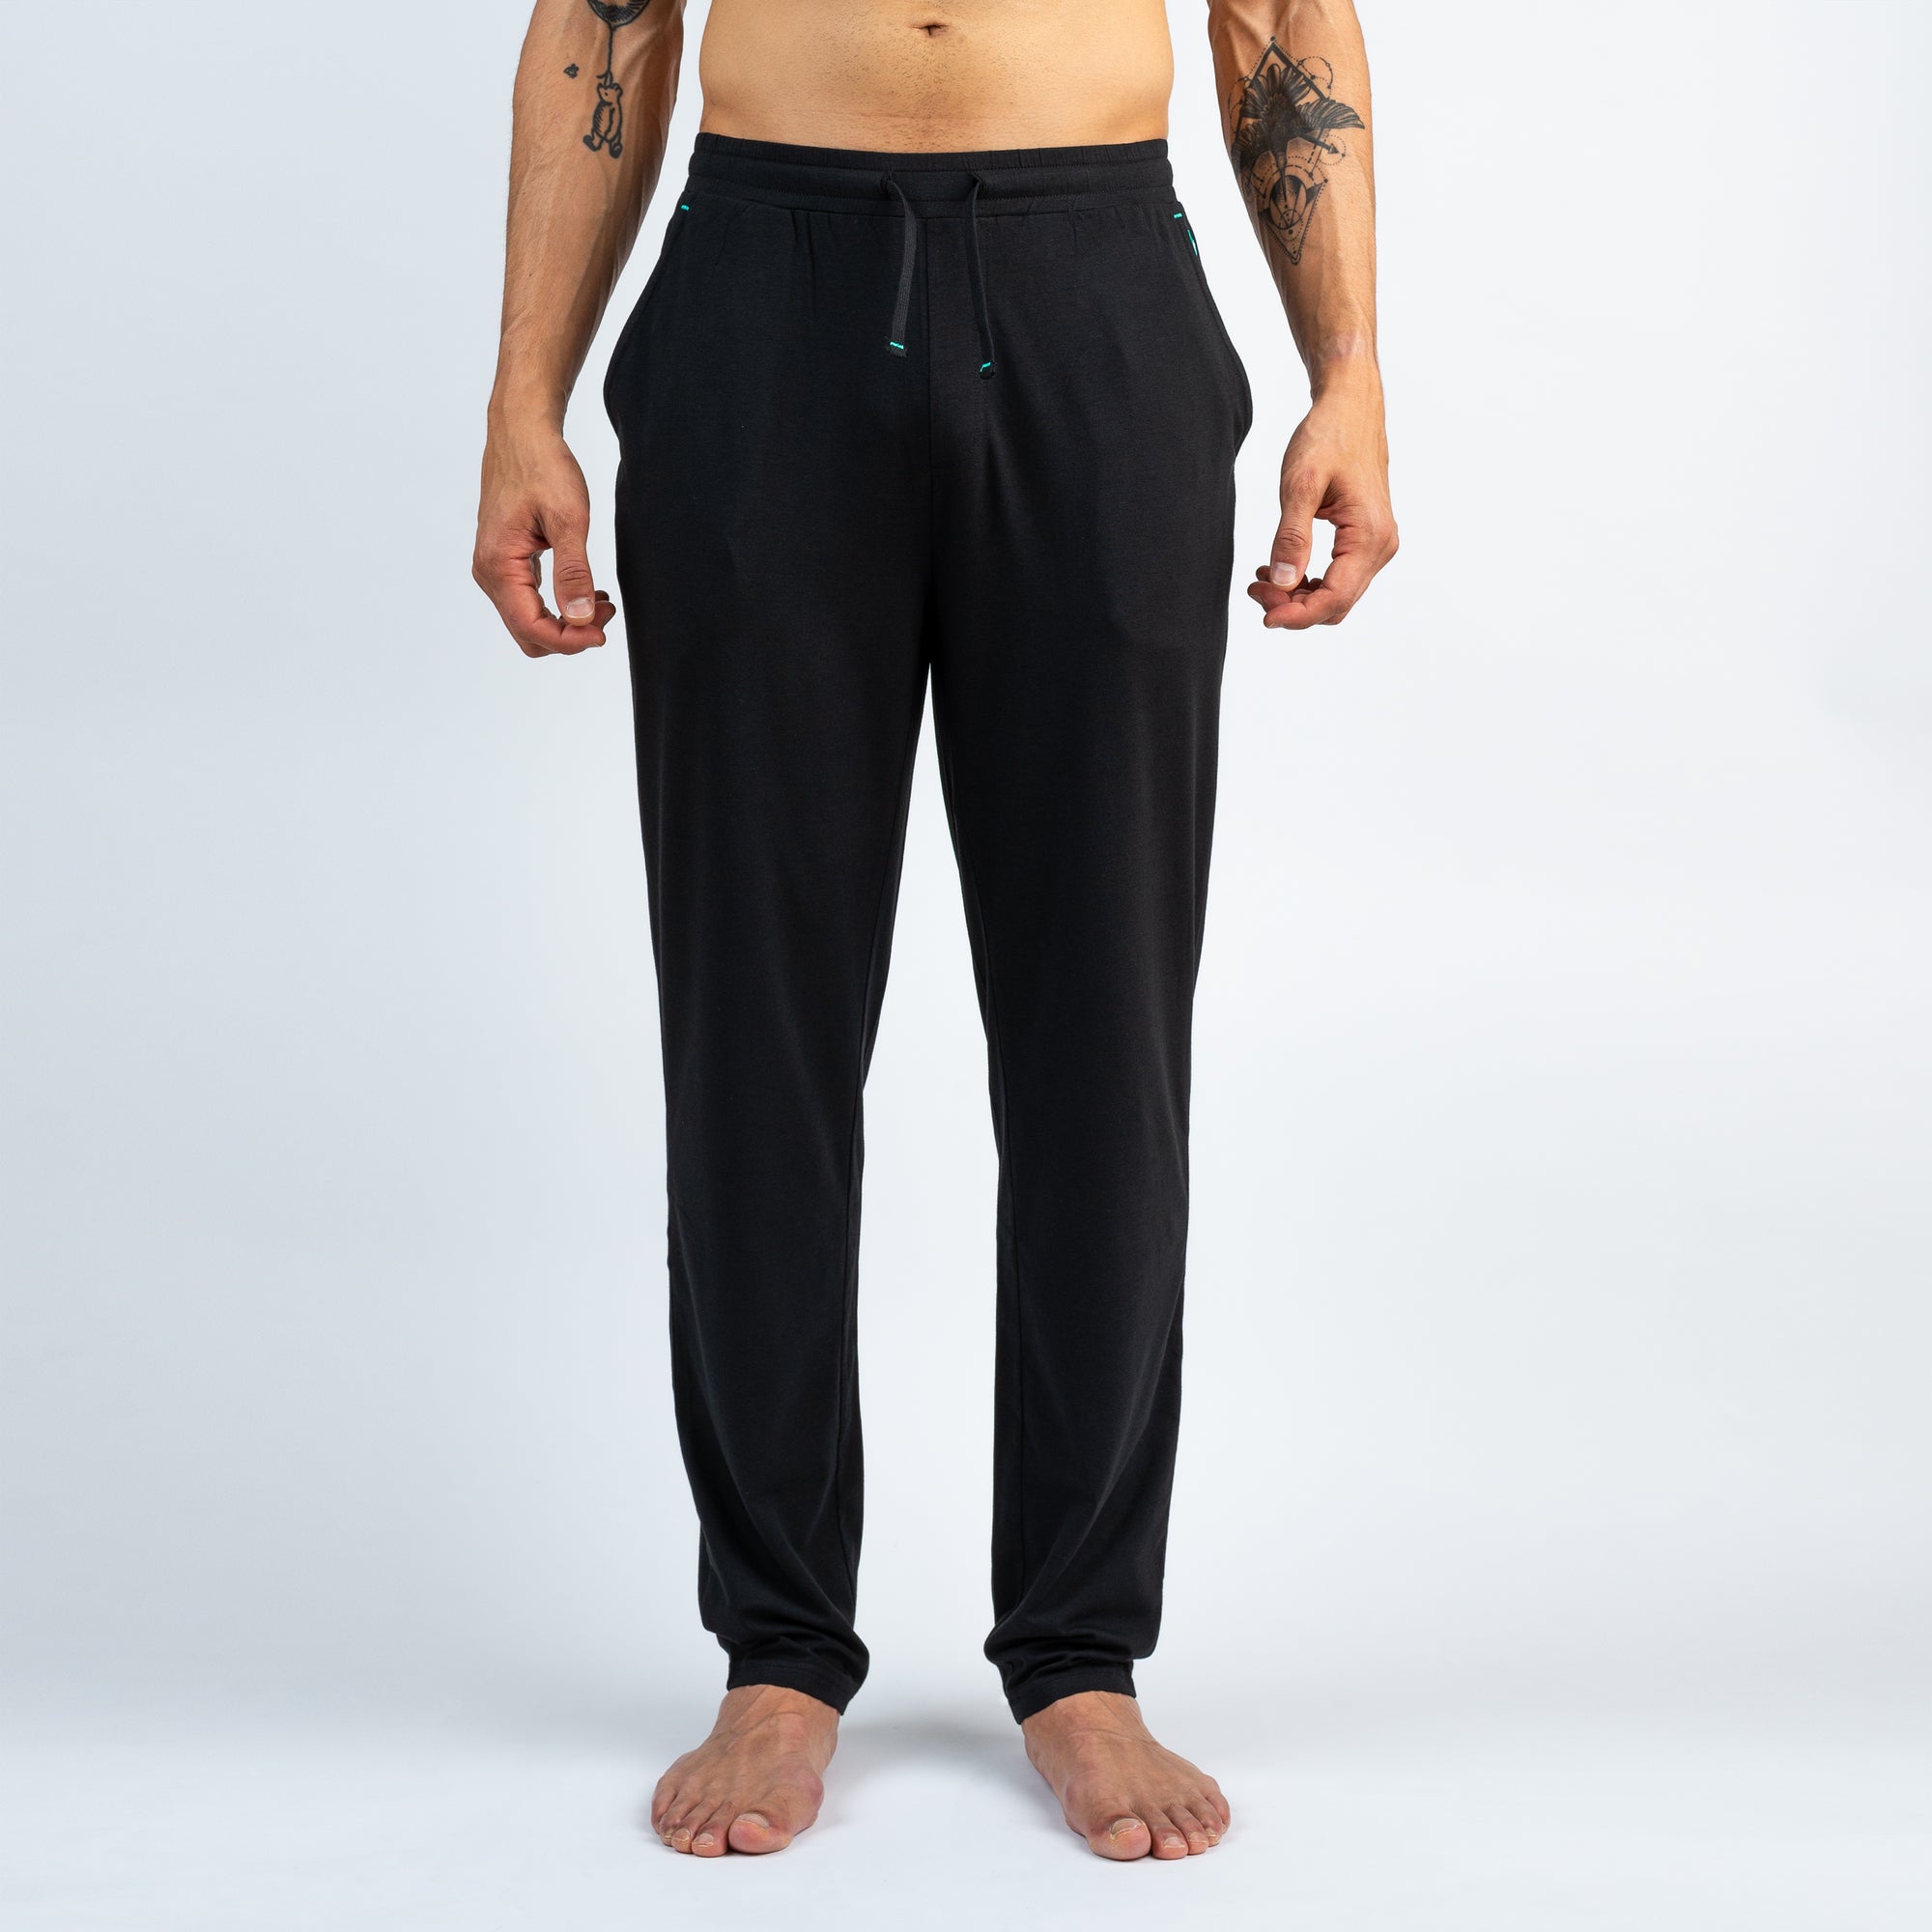 Pants Sleepwear - Black